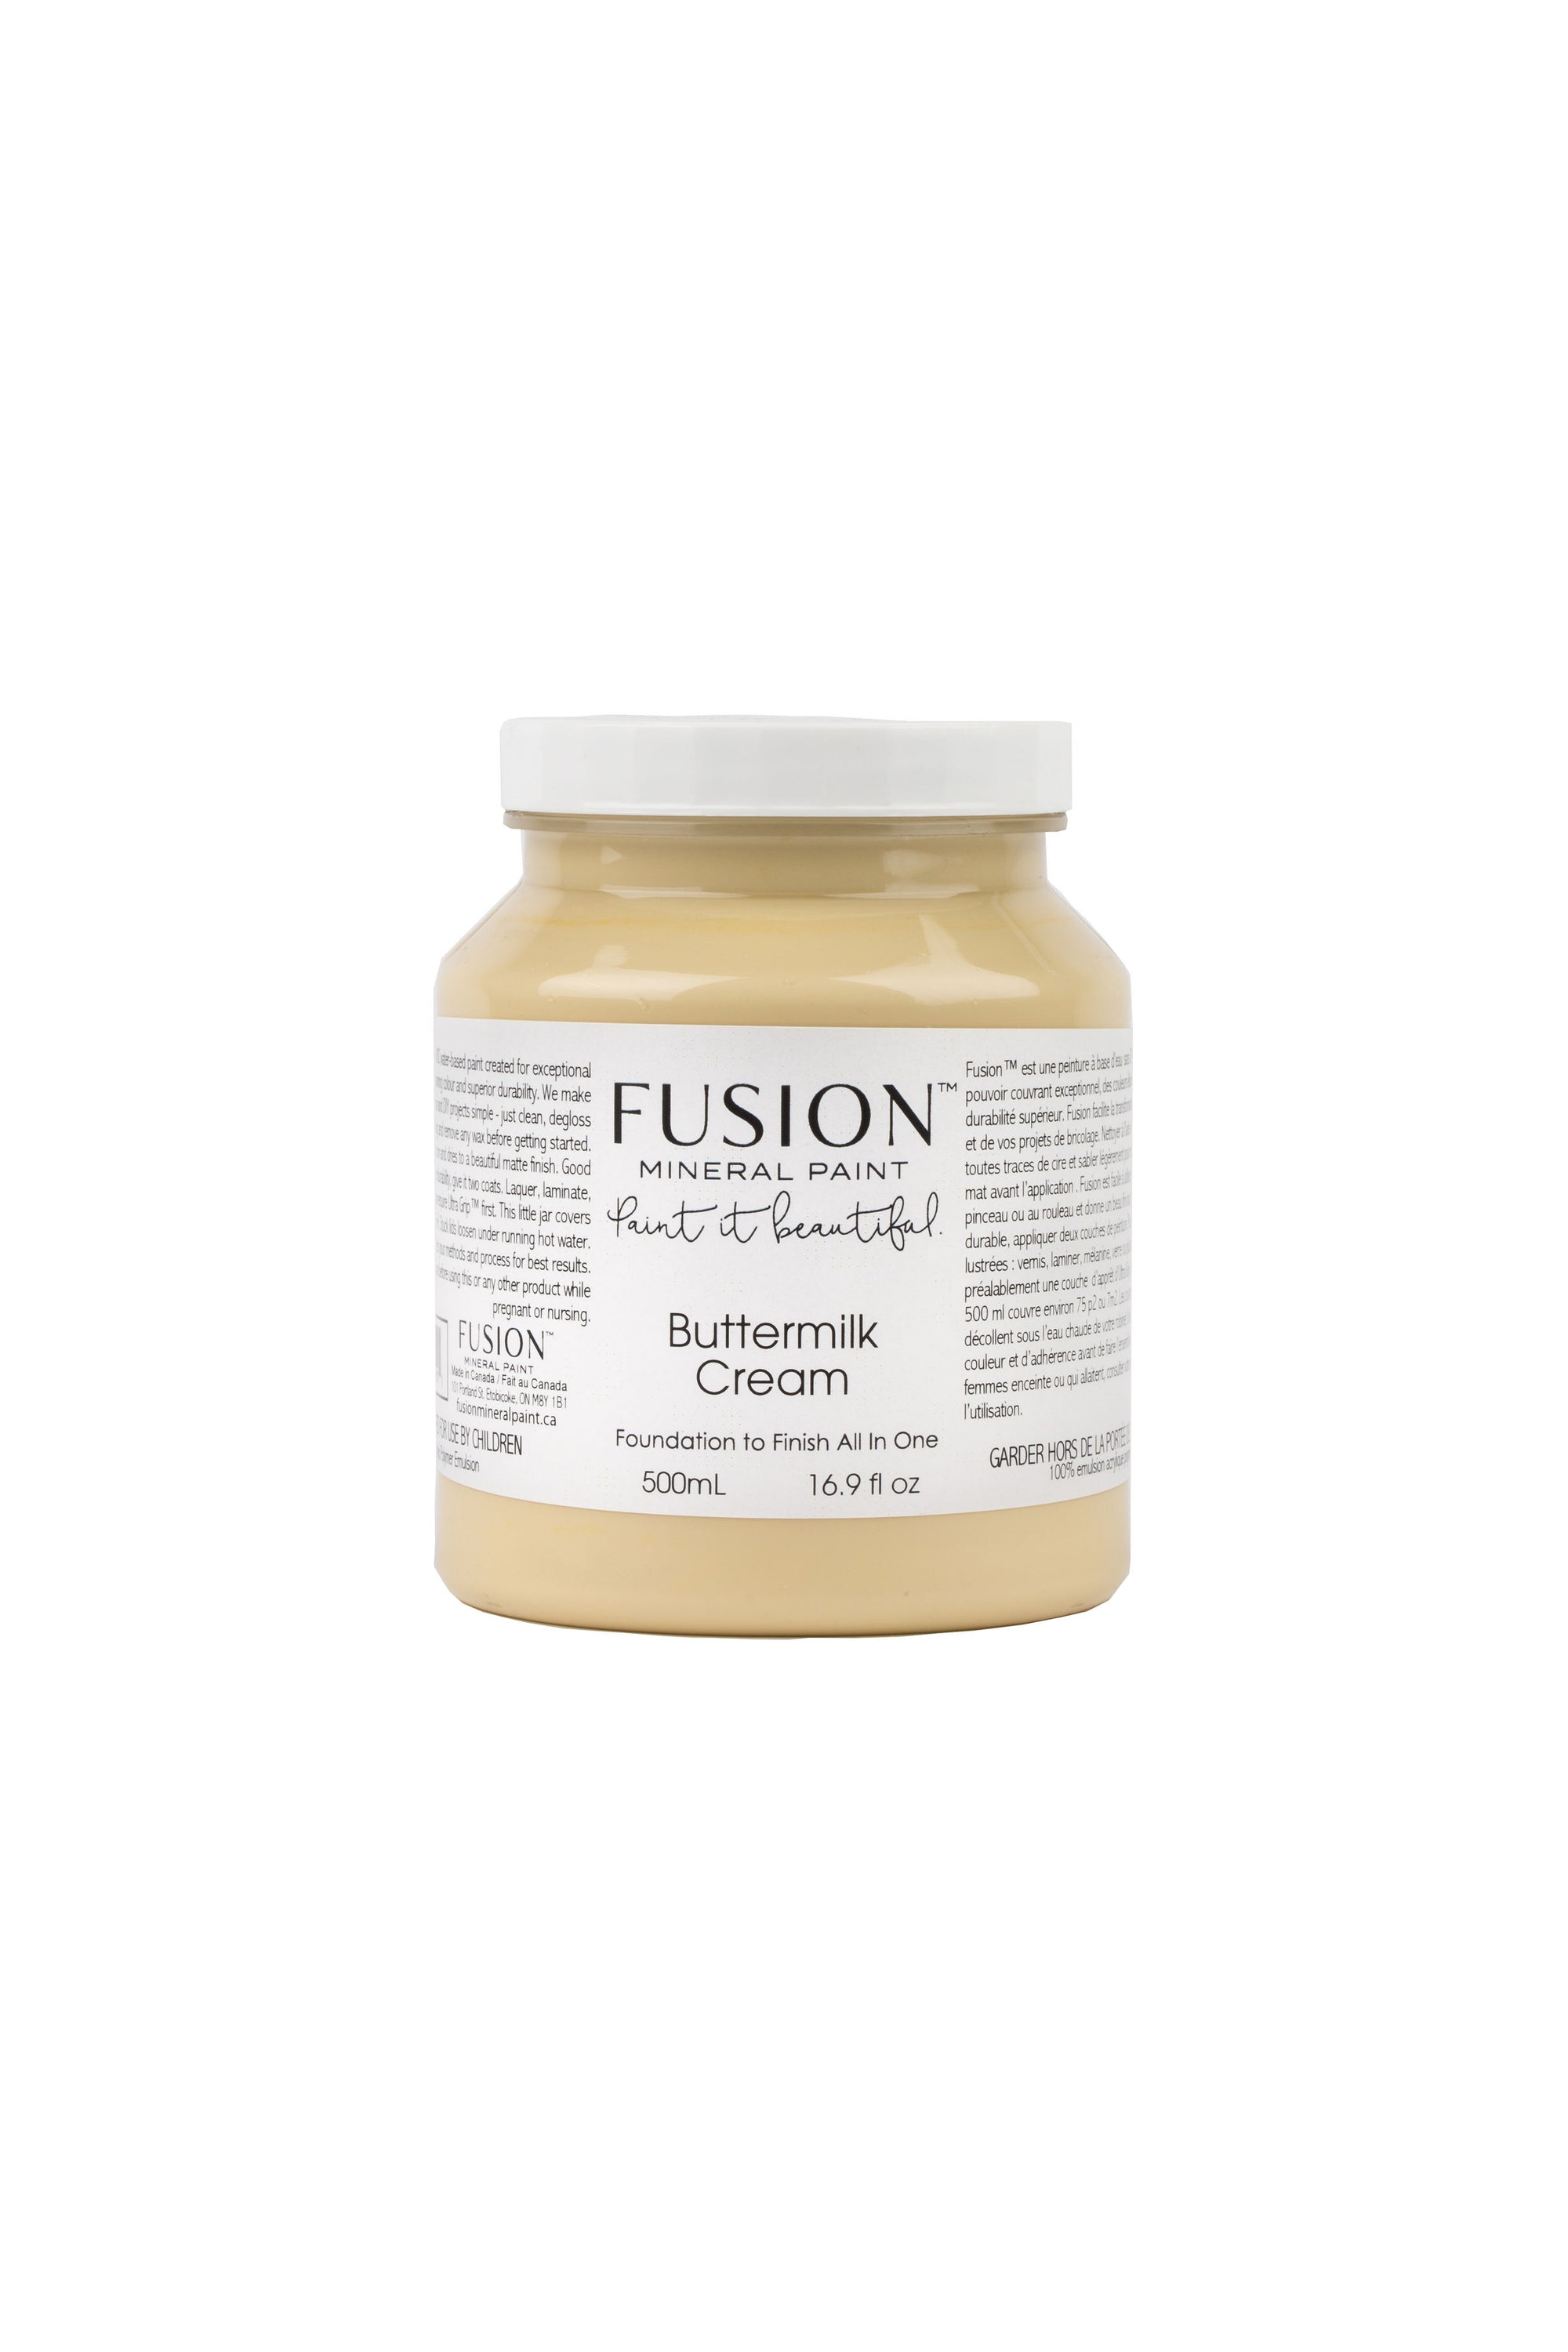 Fusion Mineral Paint Buttermilk Cream